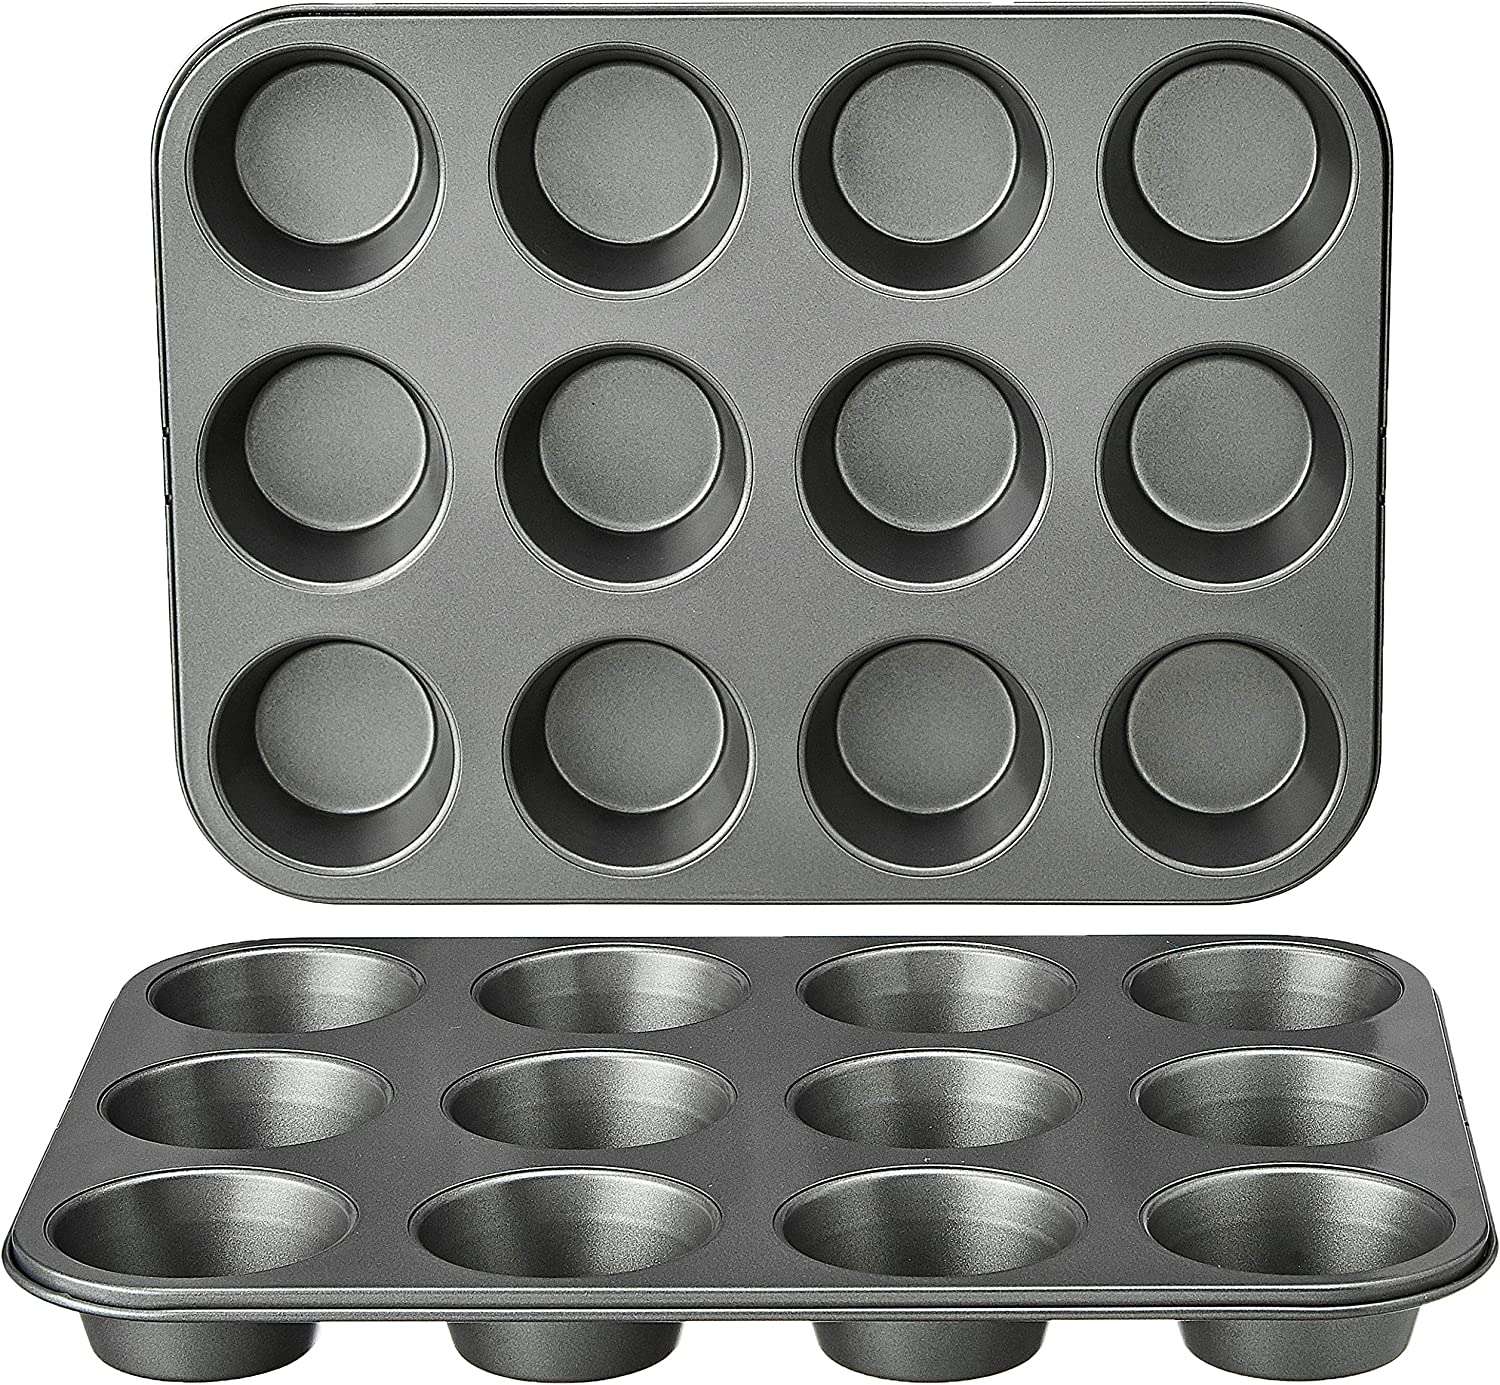 4. Amazon Basics Muffin Pan